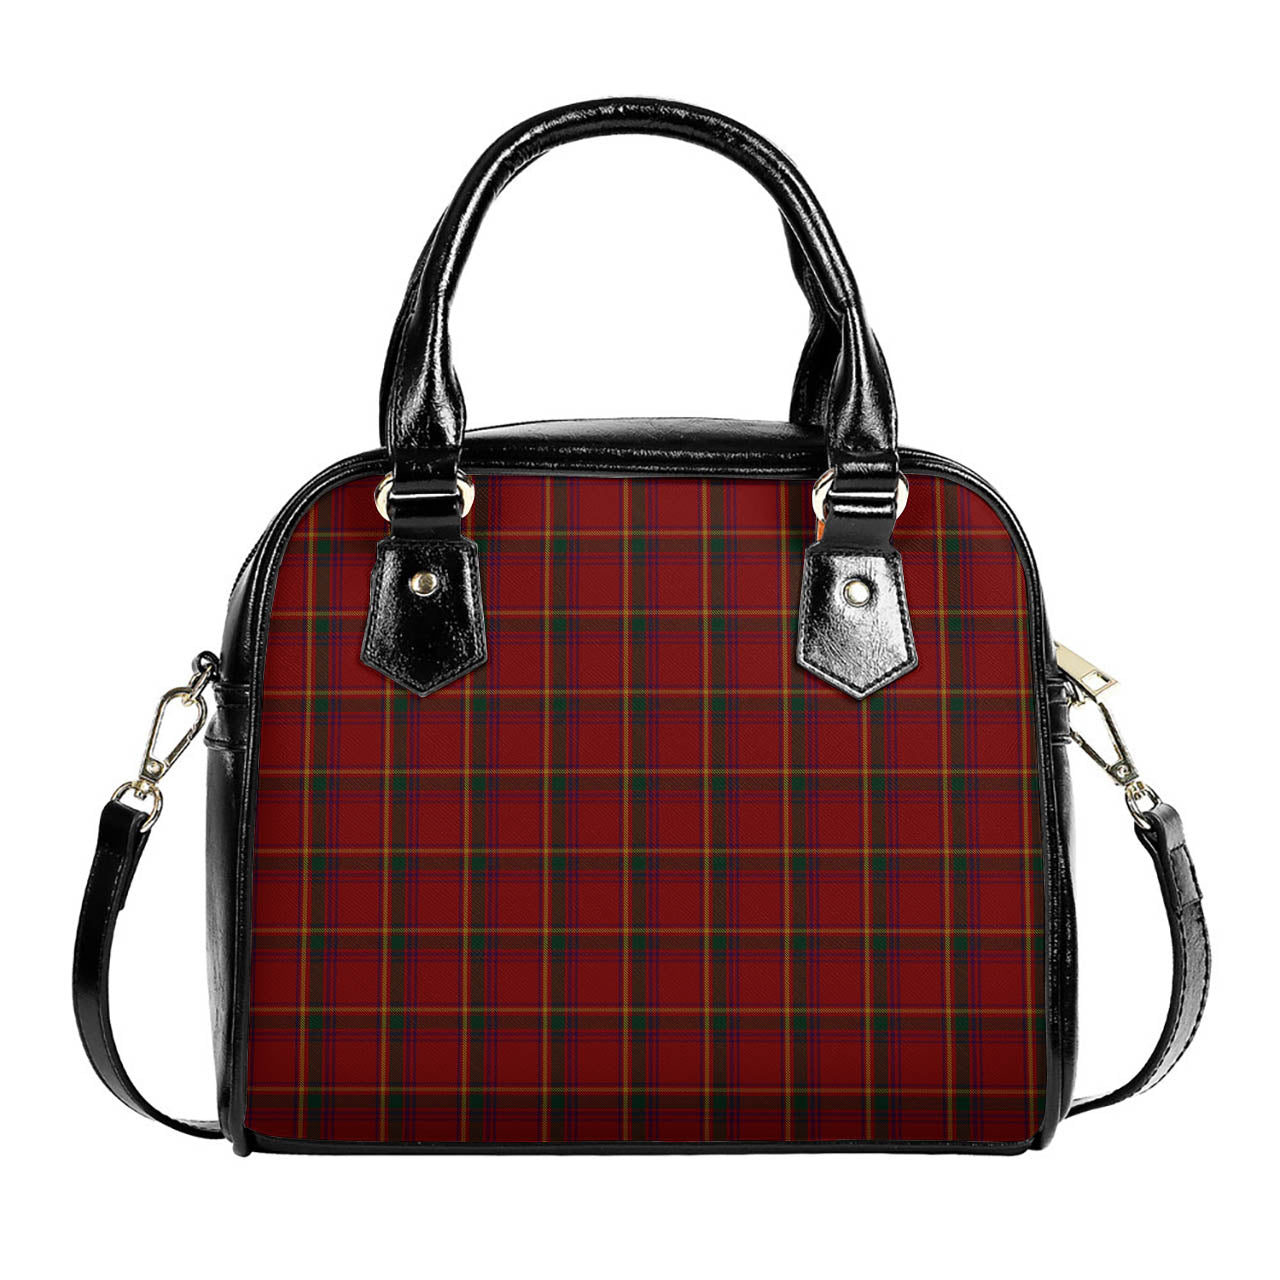 Galway County Ireland Tartan Shoulder Handbags One Size 6*25*22 cm - Tartanvibesclothing